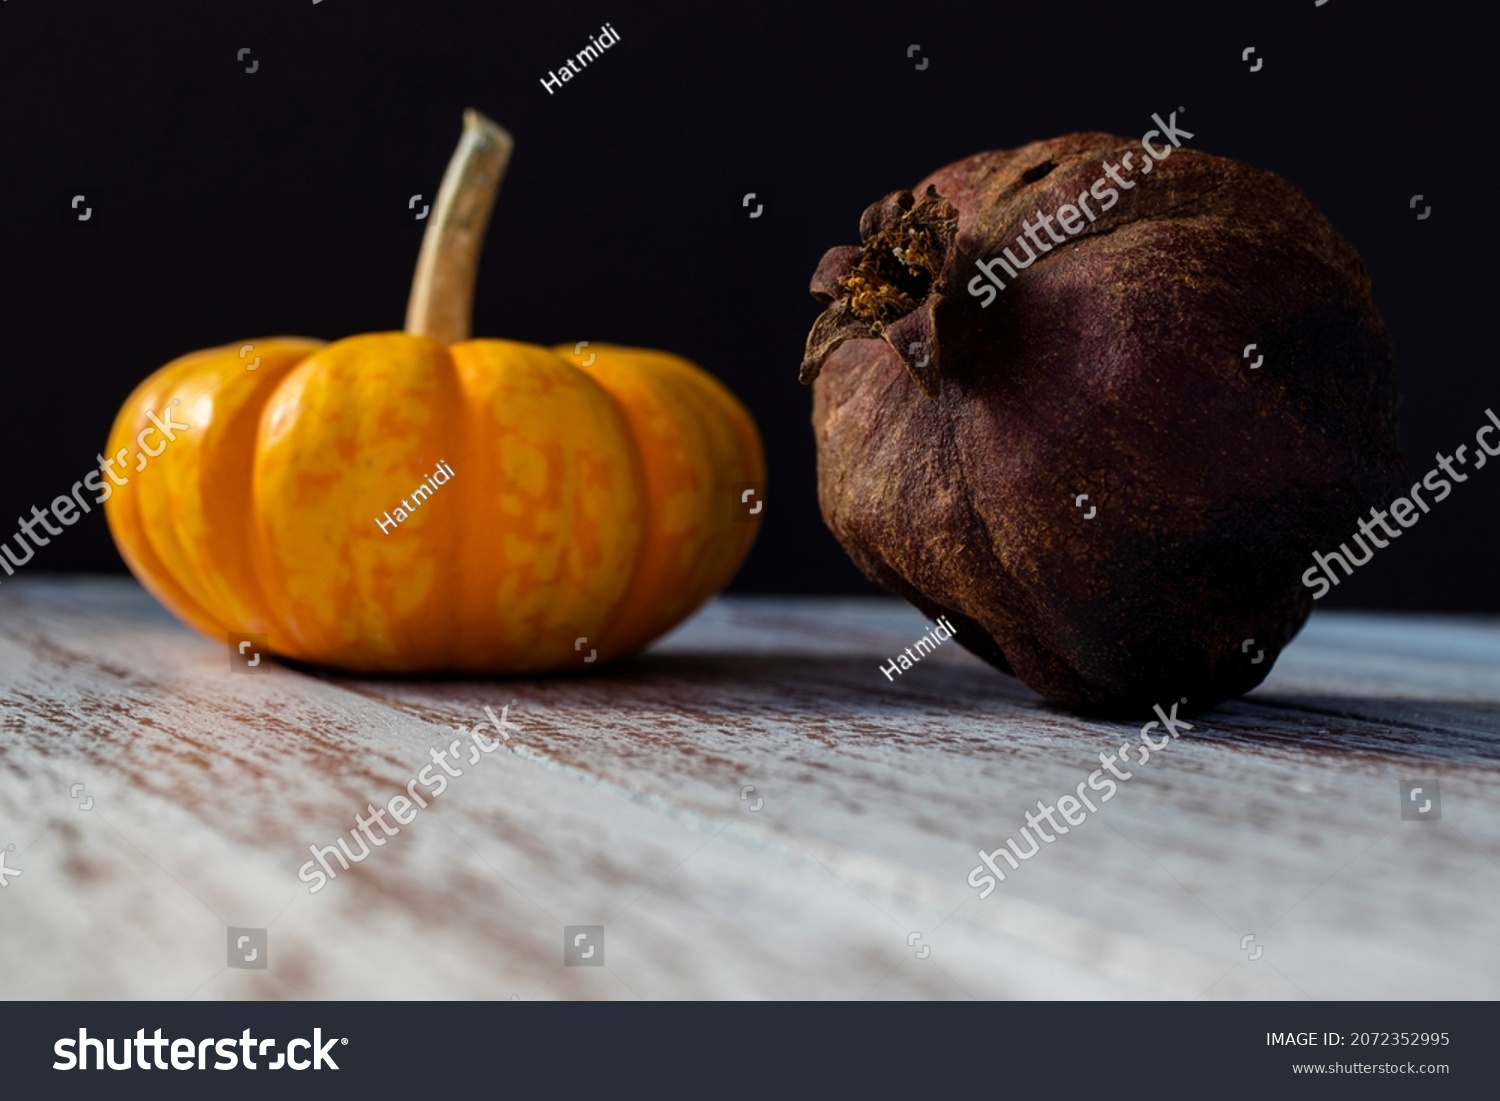 448 Rotten gourd Images, Stock Photos & Vectors | Shutterstock